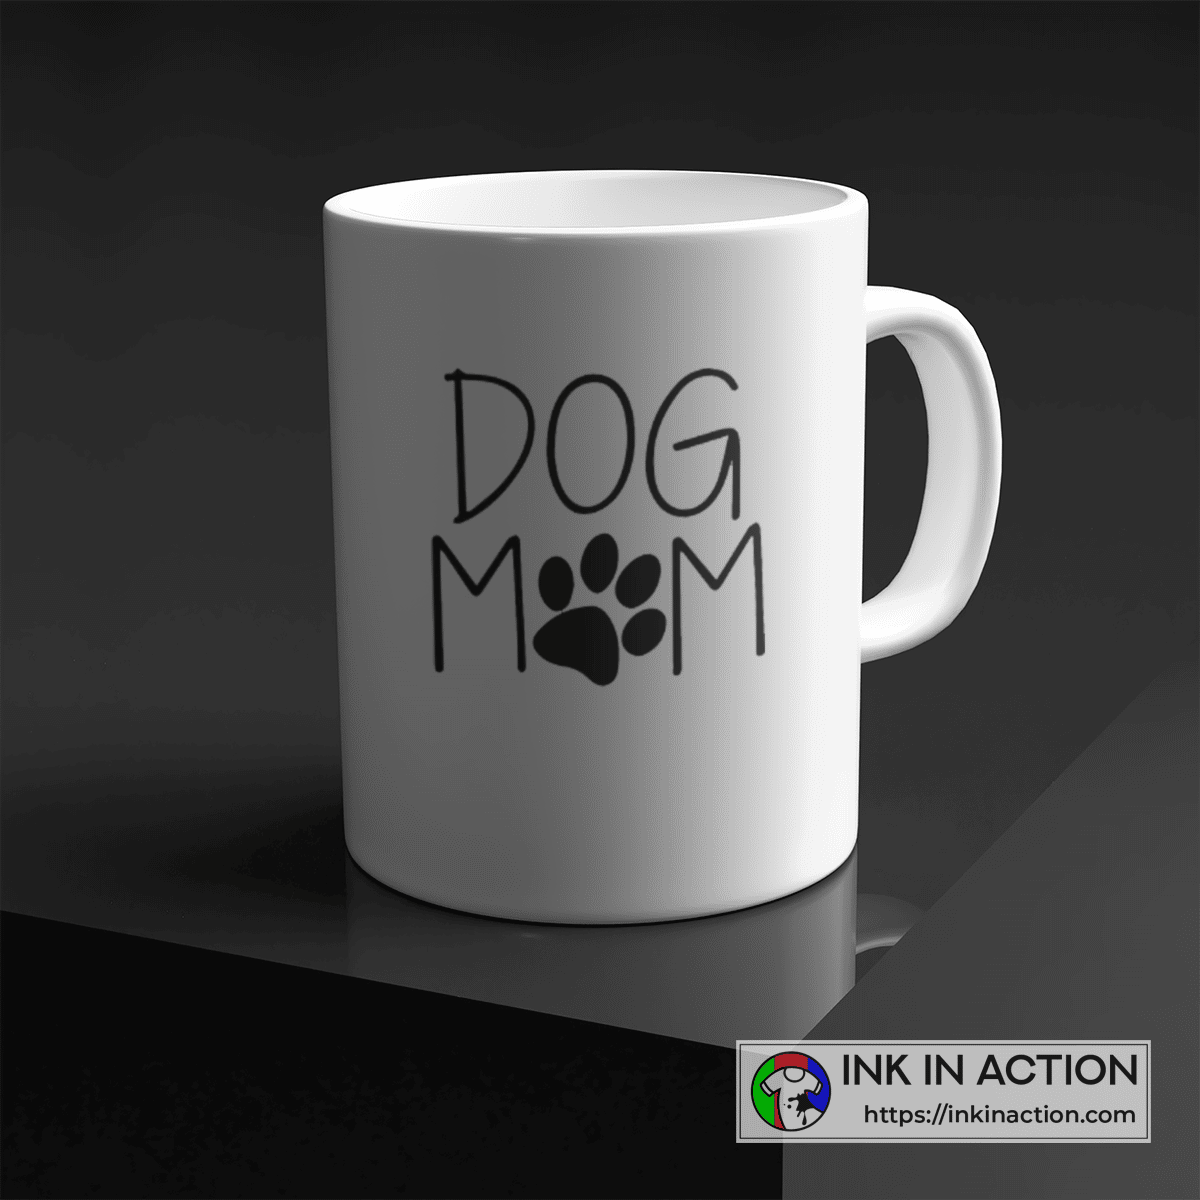 https://images.inkinaction.com/wp-content/uploads/2022/09/Coffee-and-Tea-Mug-For-Dog-Mom-Gift-for-Dog-Mom-Mug.png